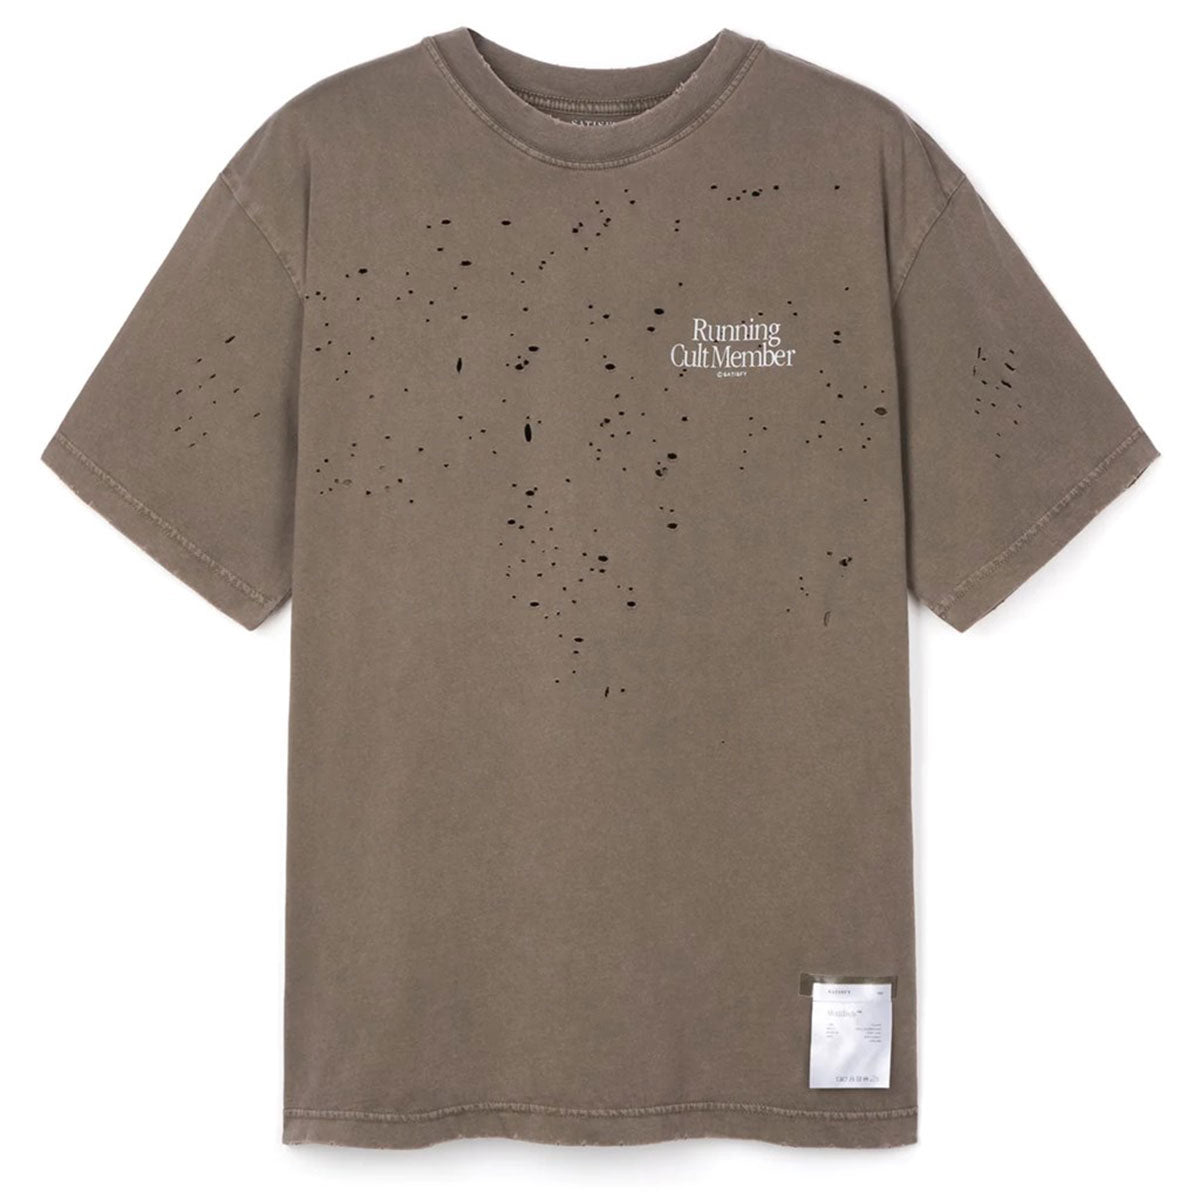 SATISFY MothTech T-Shirt-Aged Brown